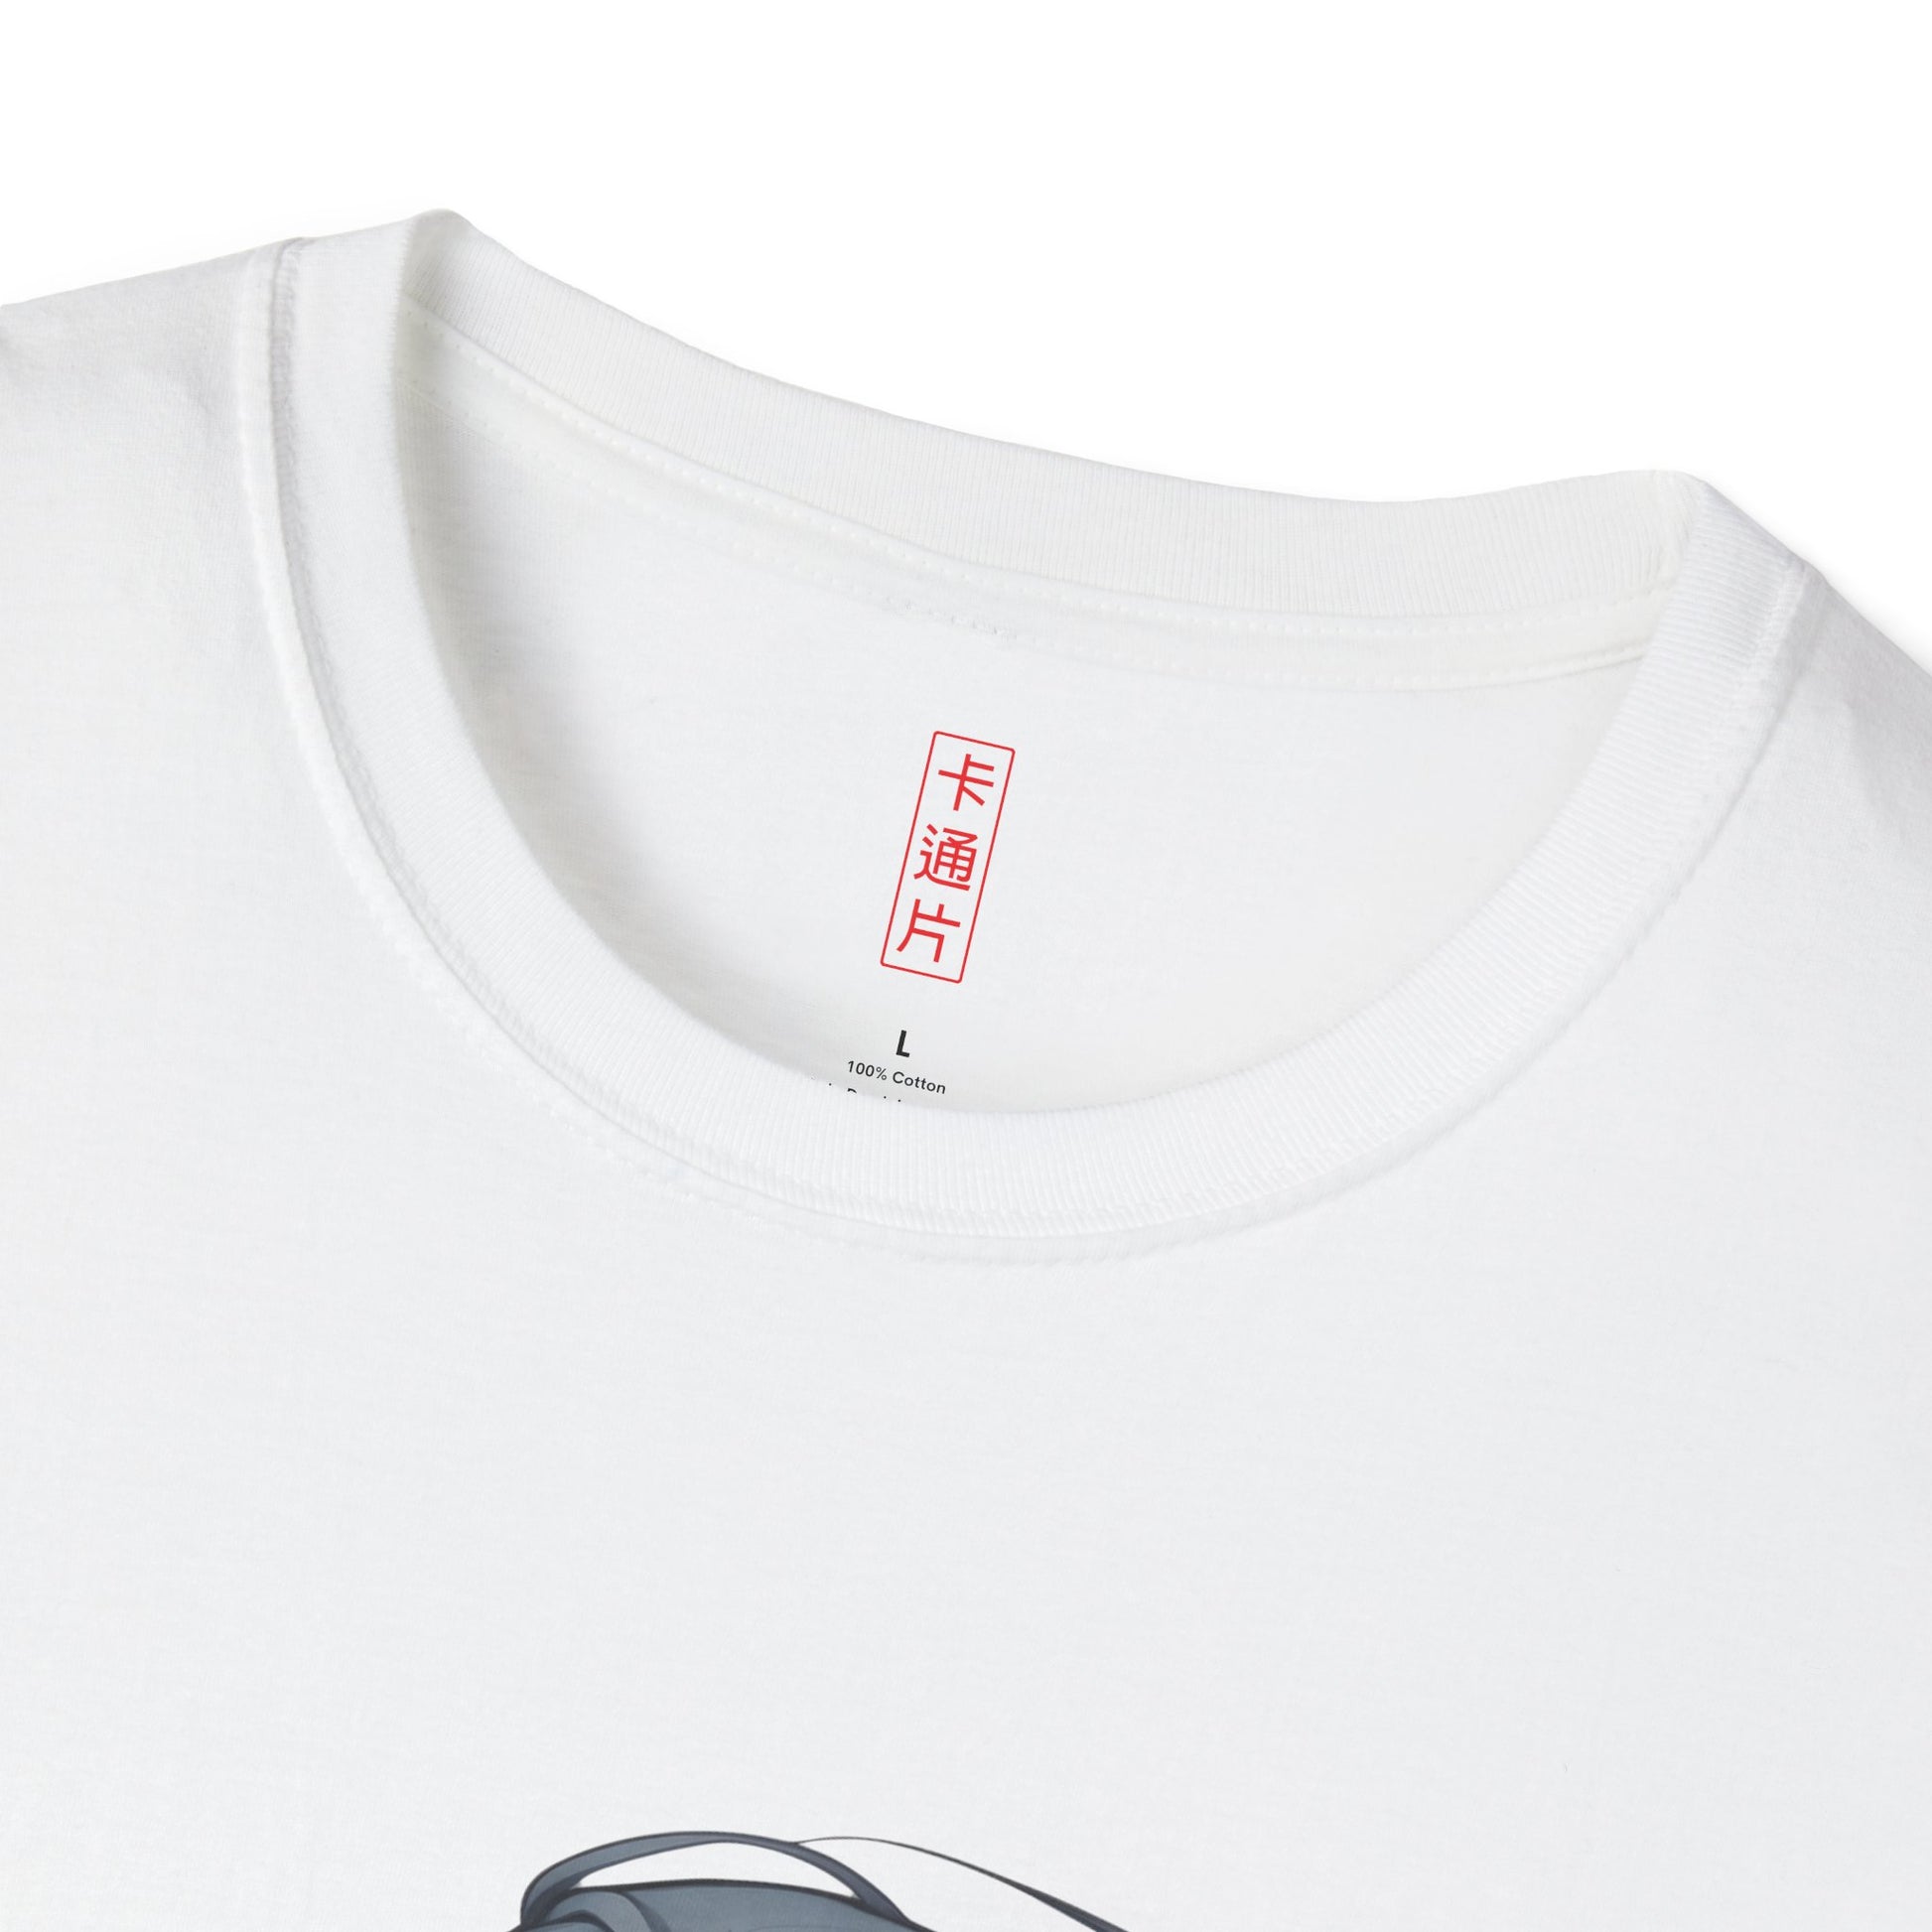 Kǎtōng Piàn - California Love Collection - 033 - Unisex Softstyle T-Shirt Printify